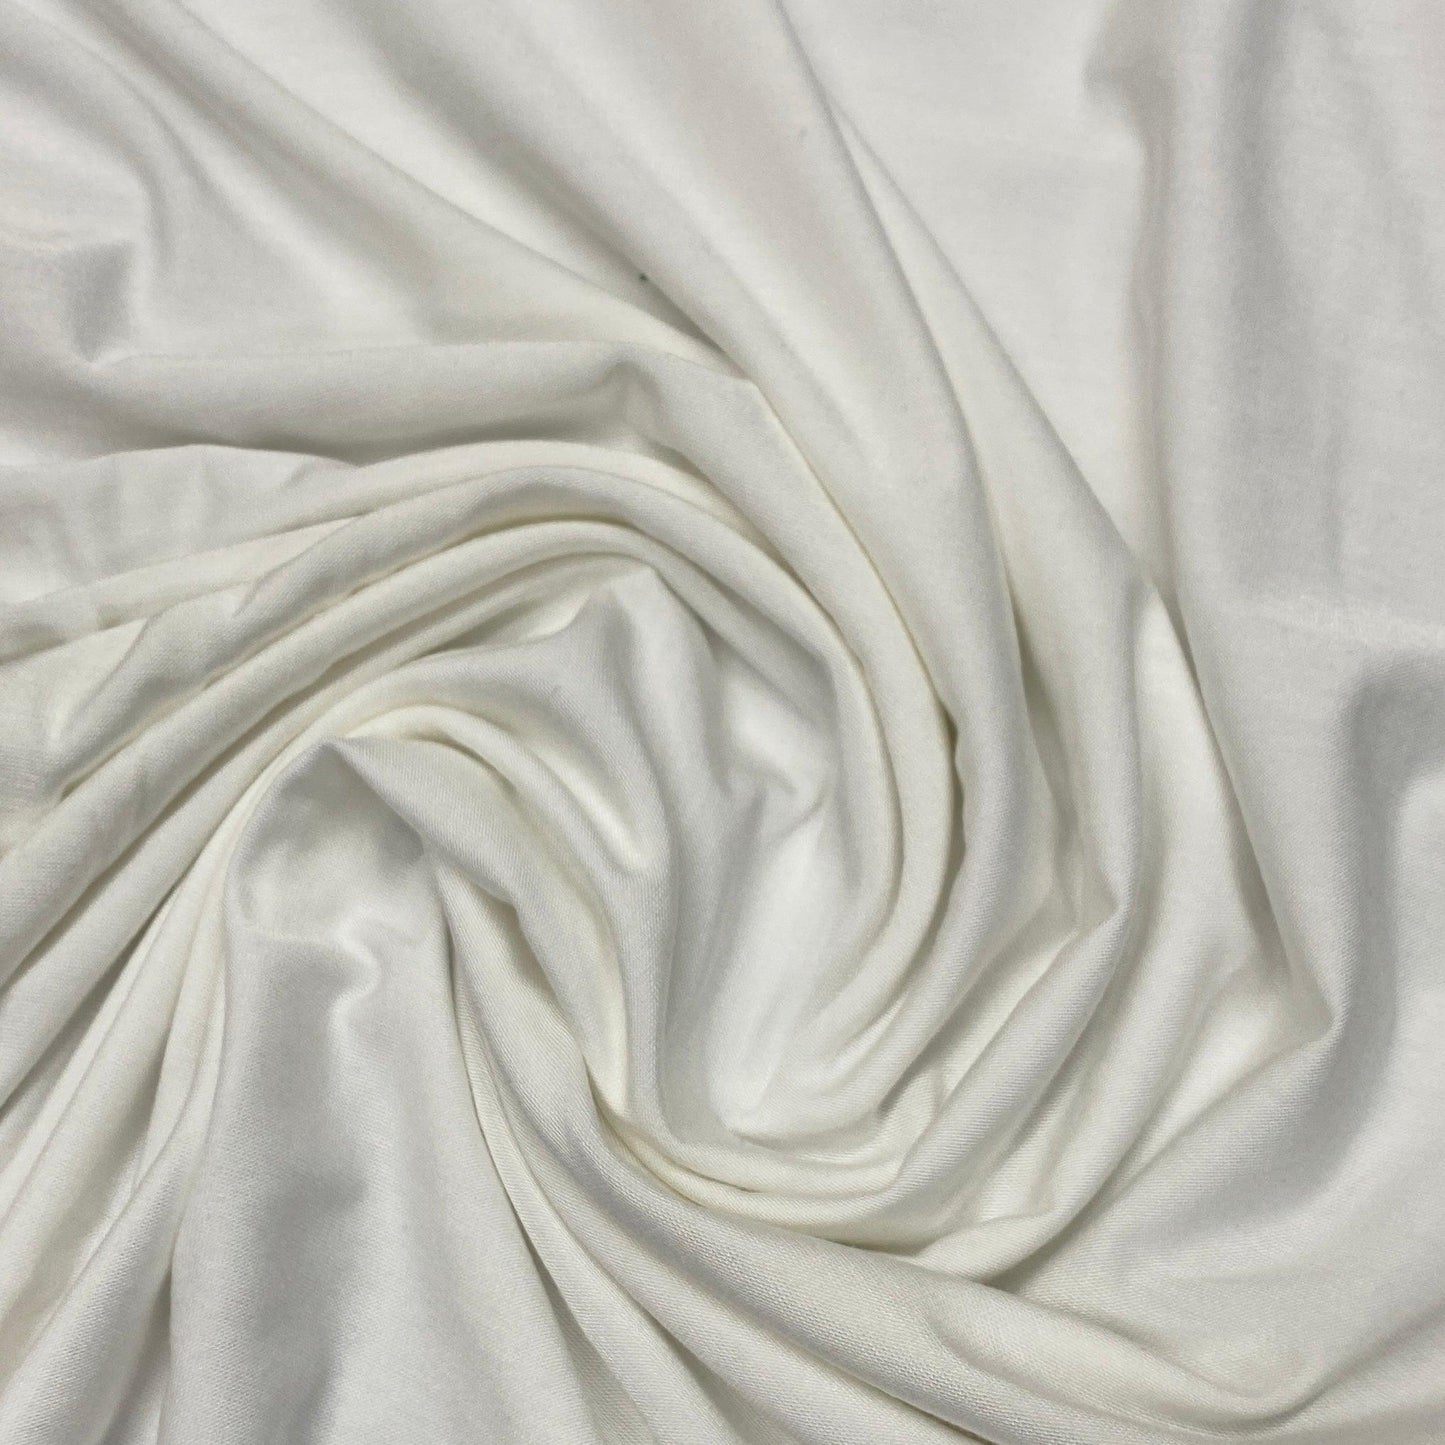 Off-White Modal/Spandex Jersey Fabric - 165 GSM - Nature's Fabrics